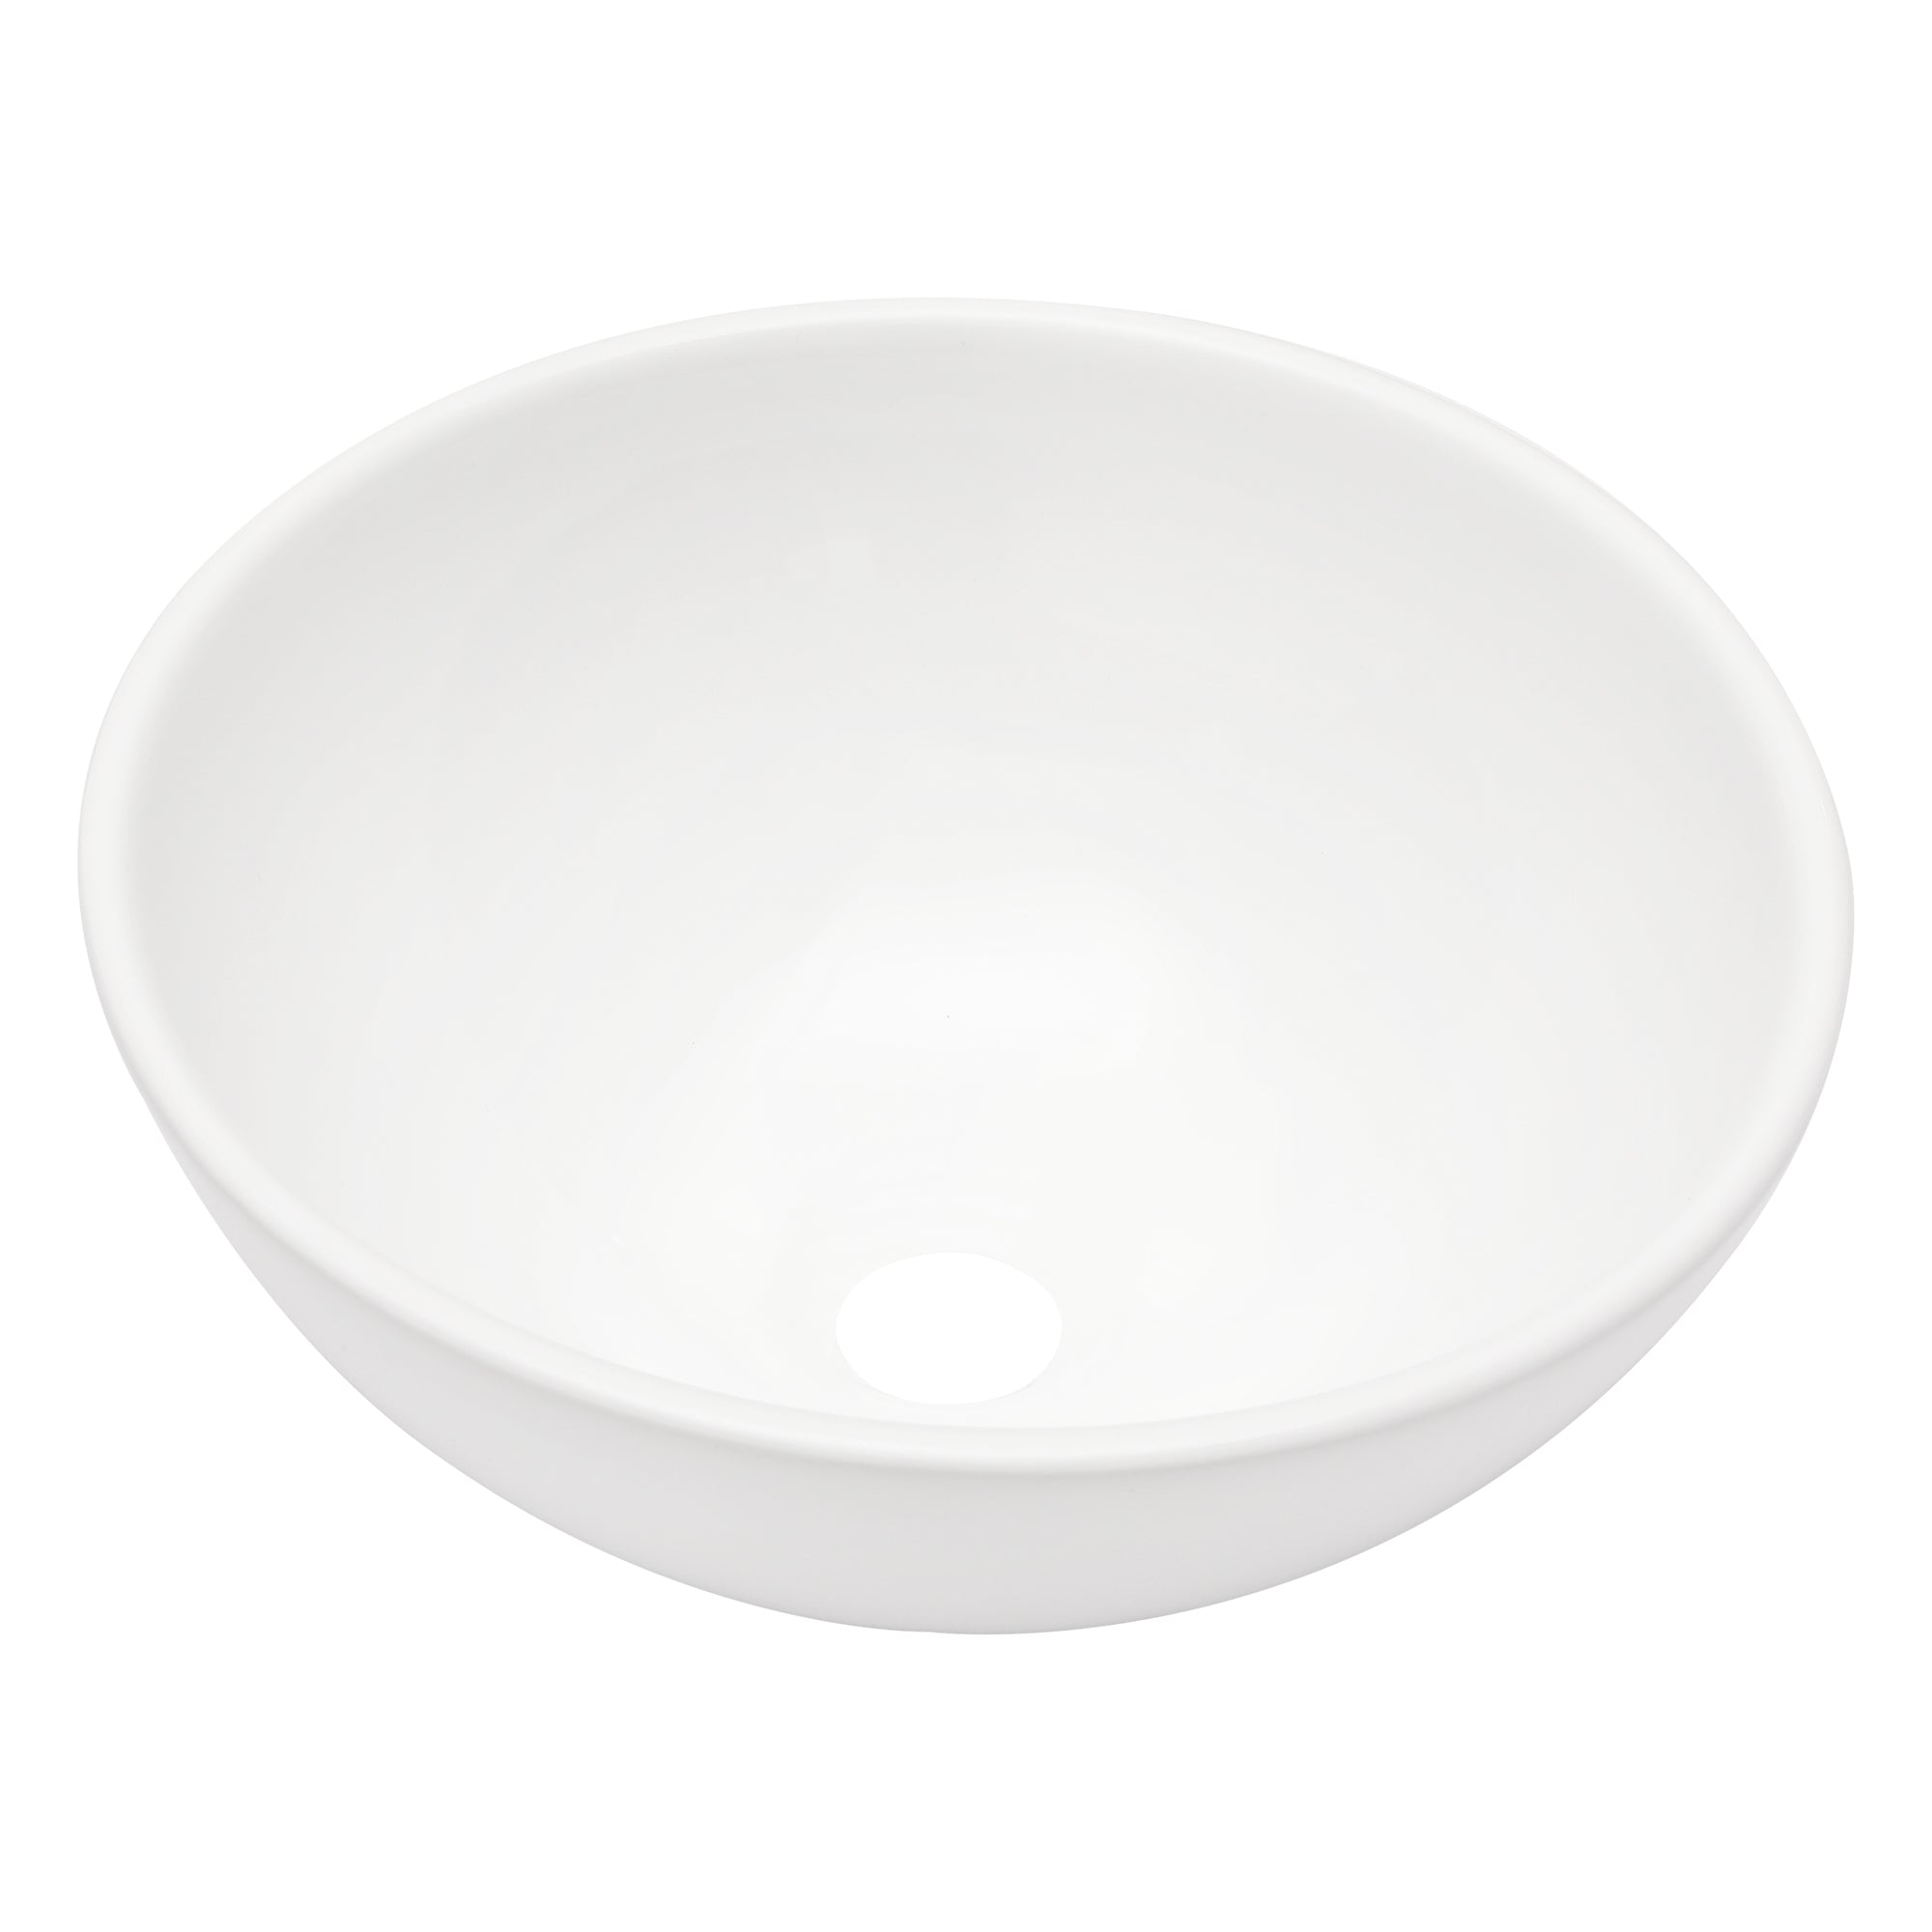 13in W x 13in D Washroom Sink Design Bathroom Vessel Sink Round Bowl White Ceramic | Bathroom Sink, Bathroom Vessel Sink | Lordear